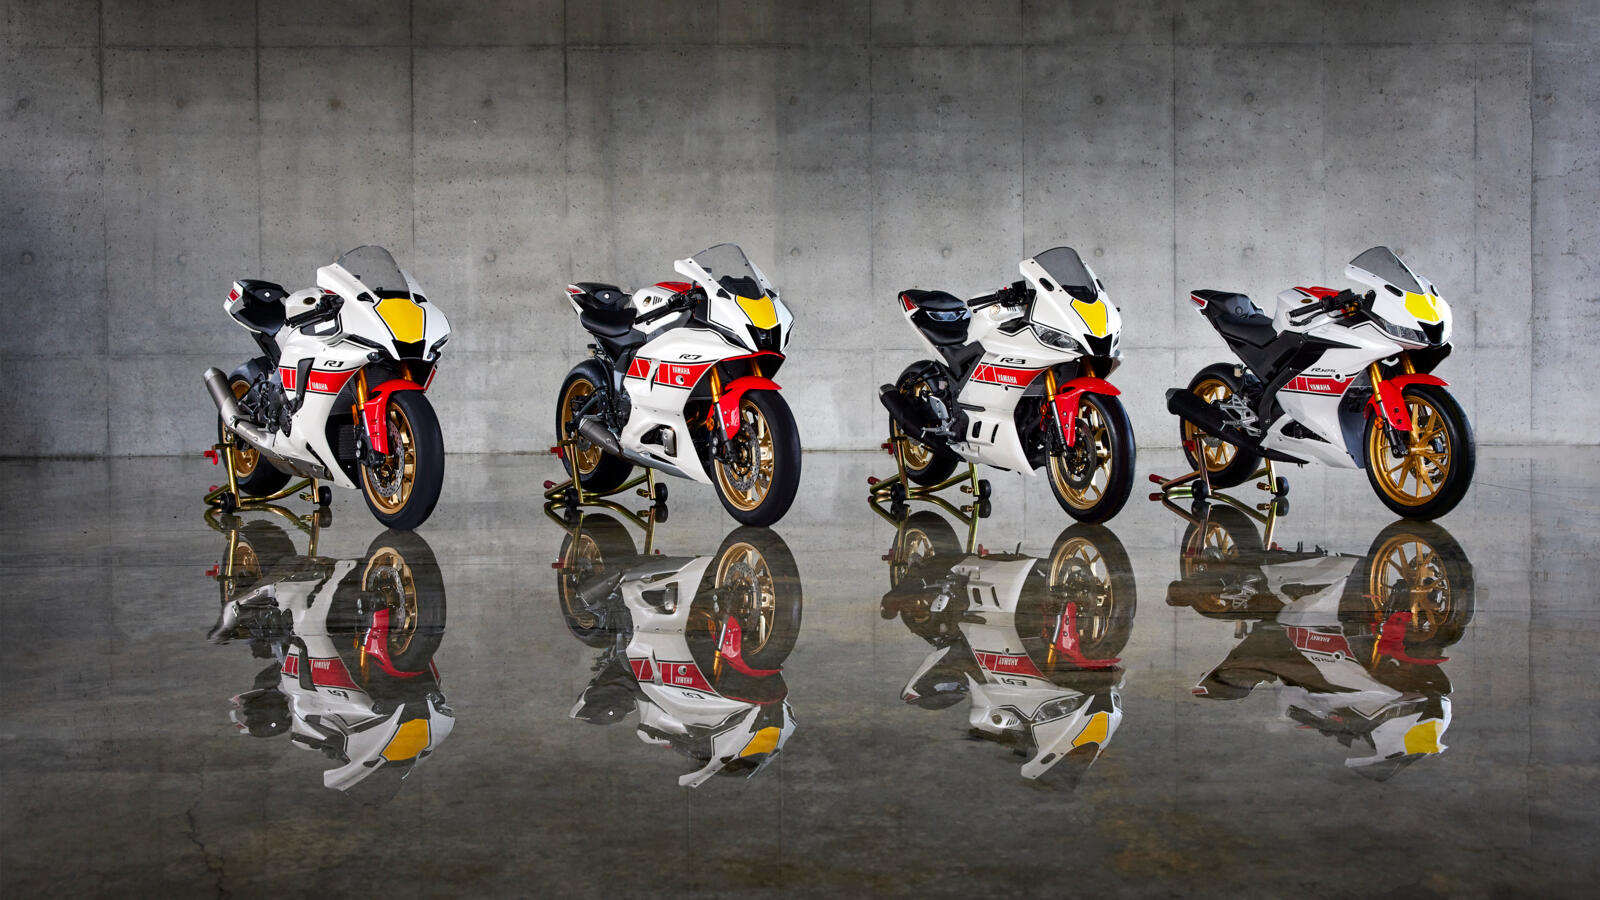 Modelele Yamaha R-Series 2022 sărbătoresc istoria curselor Grand Prix Yamaha